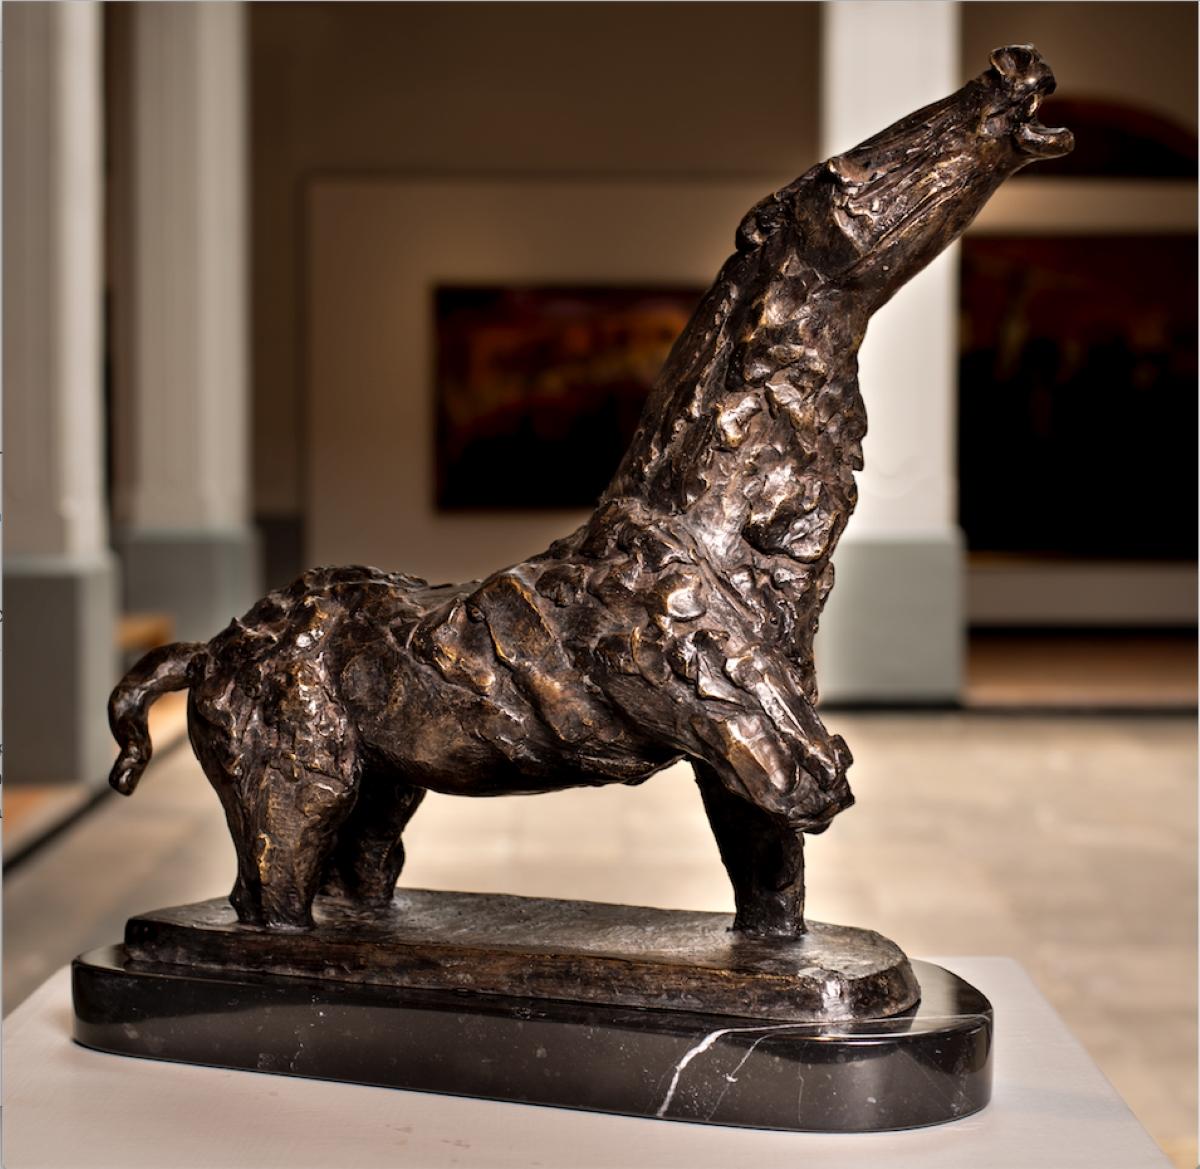 Luis Filcer Figurative Sculpture - "Stallion" - Bronze horse sculpture.